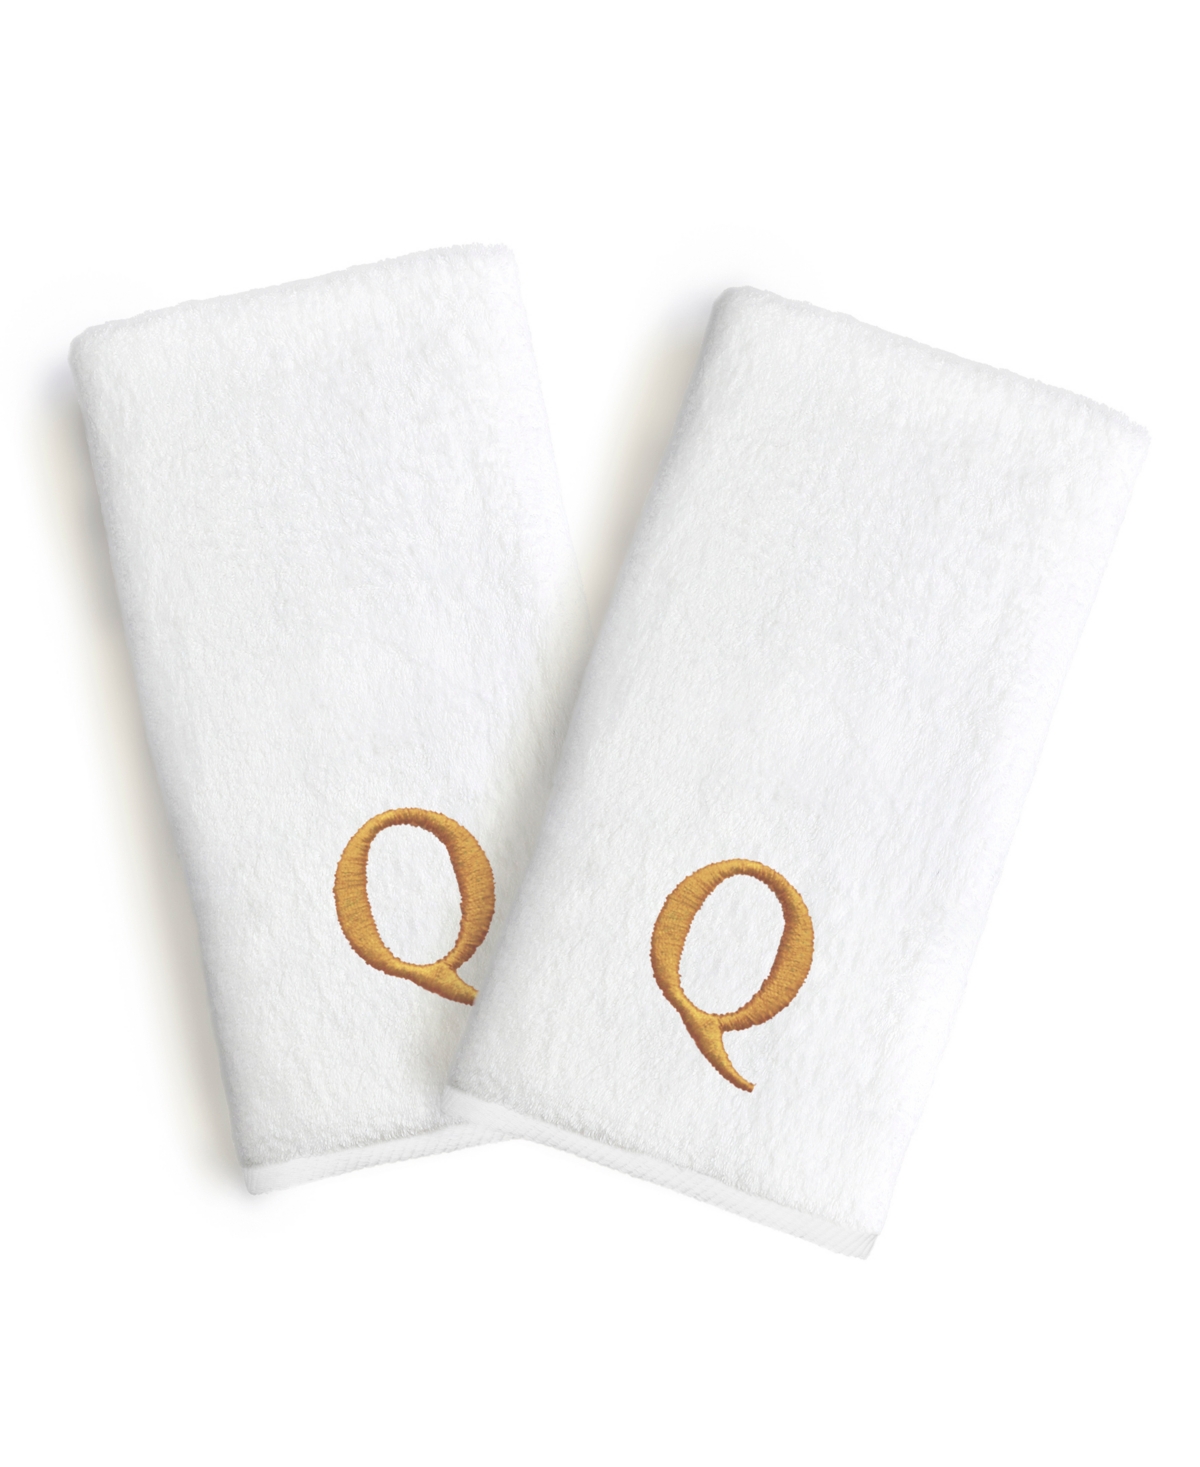 Linum Home Bookman Gold Font Monogrammed Luxury 100% Turkish Cotton Novelty 2-piece Hand Towels, 16" X 30" Bedd In Gold - Q